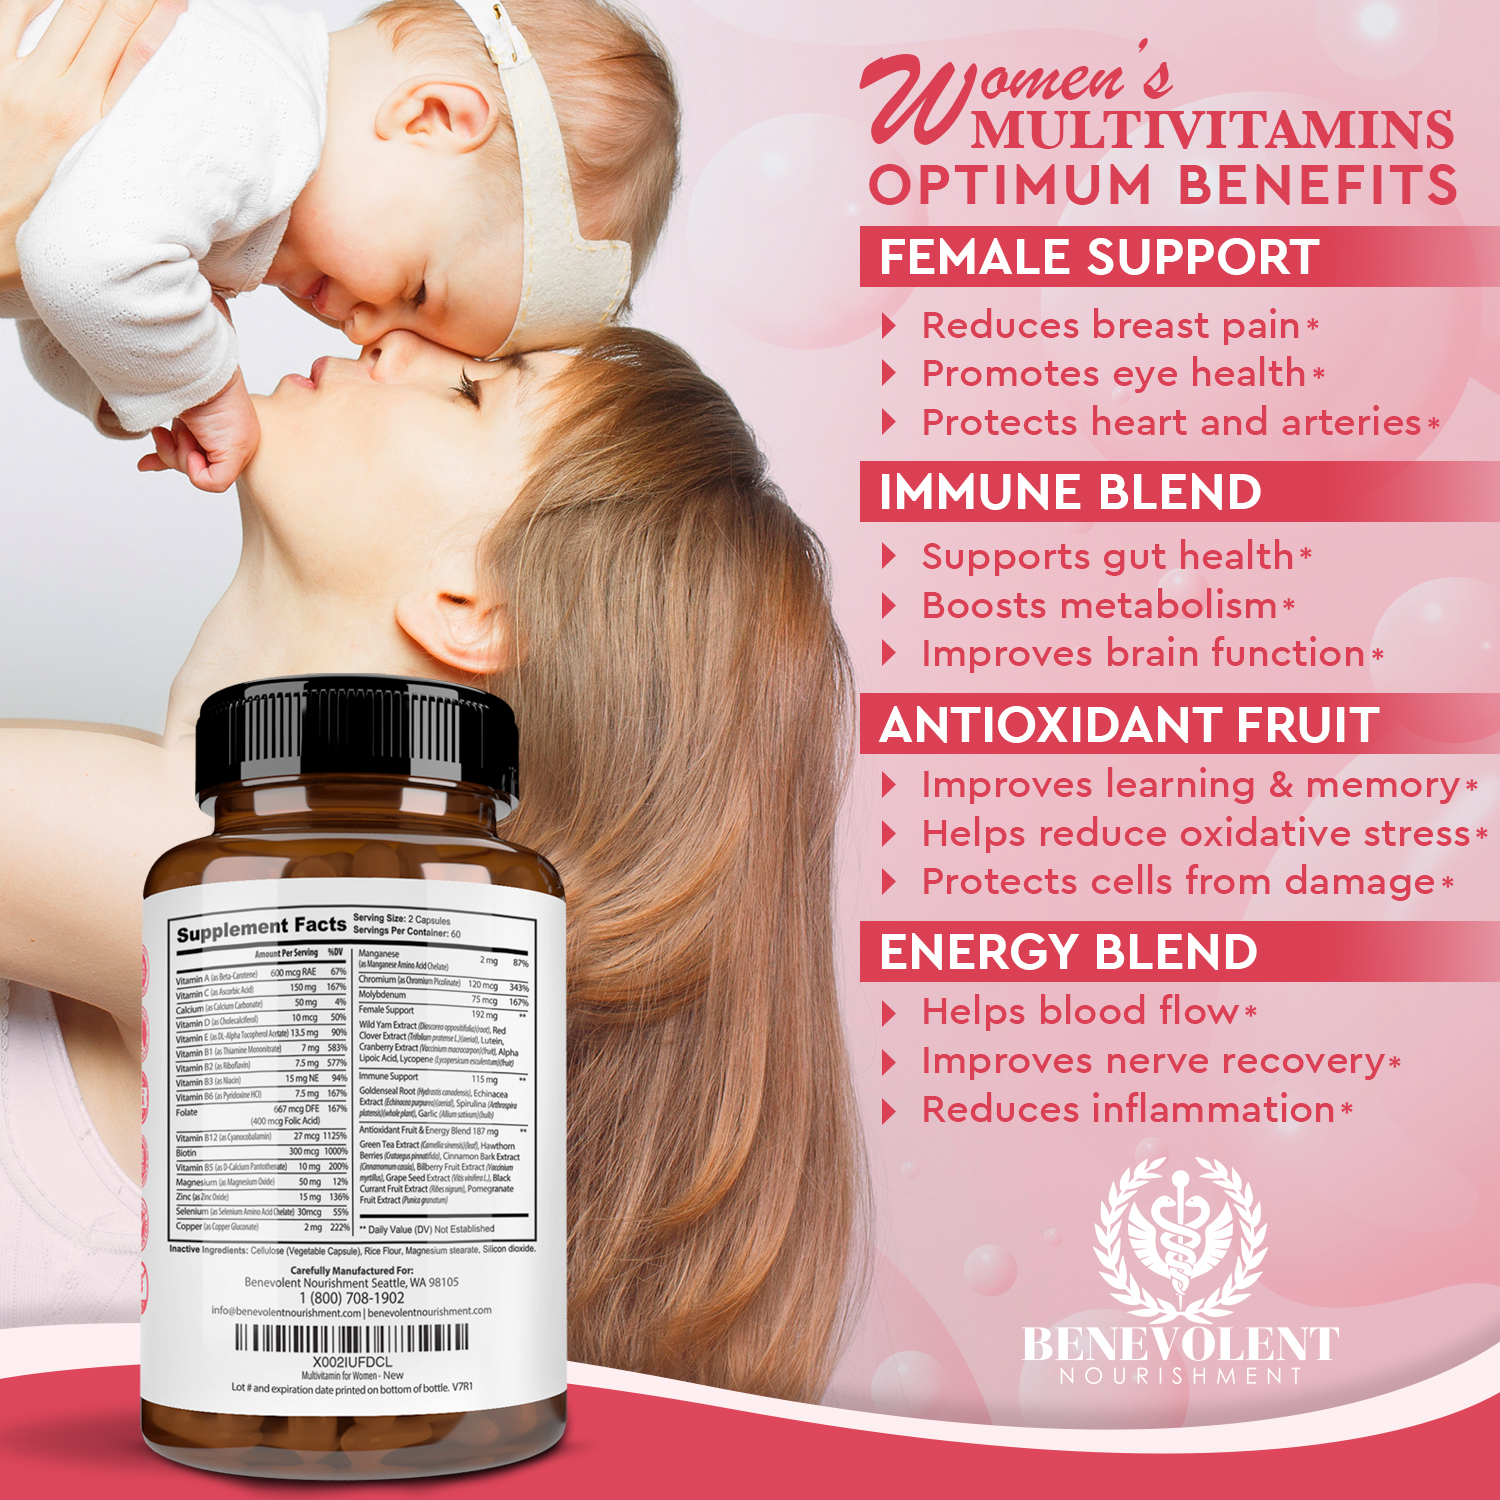 Multivitamin for Women benefits